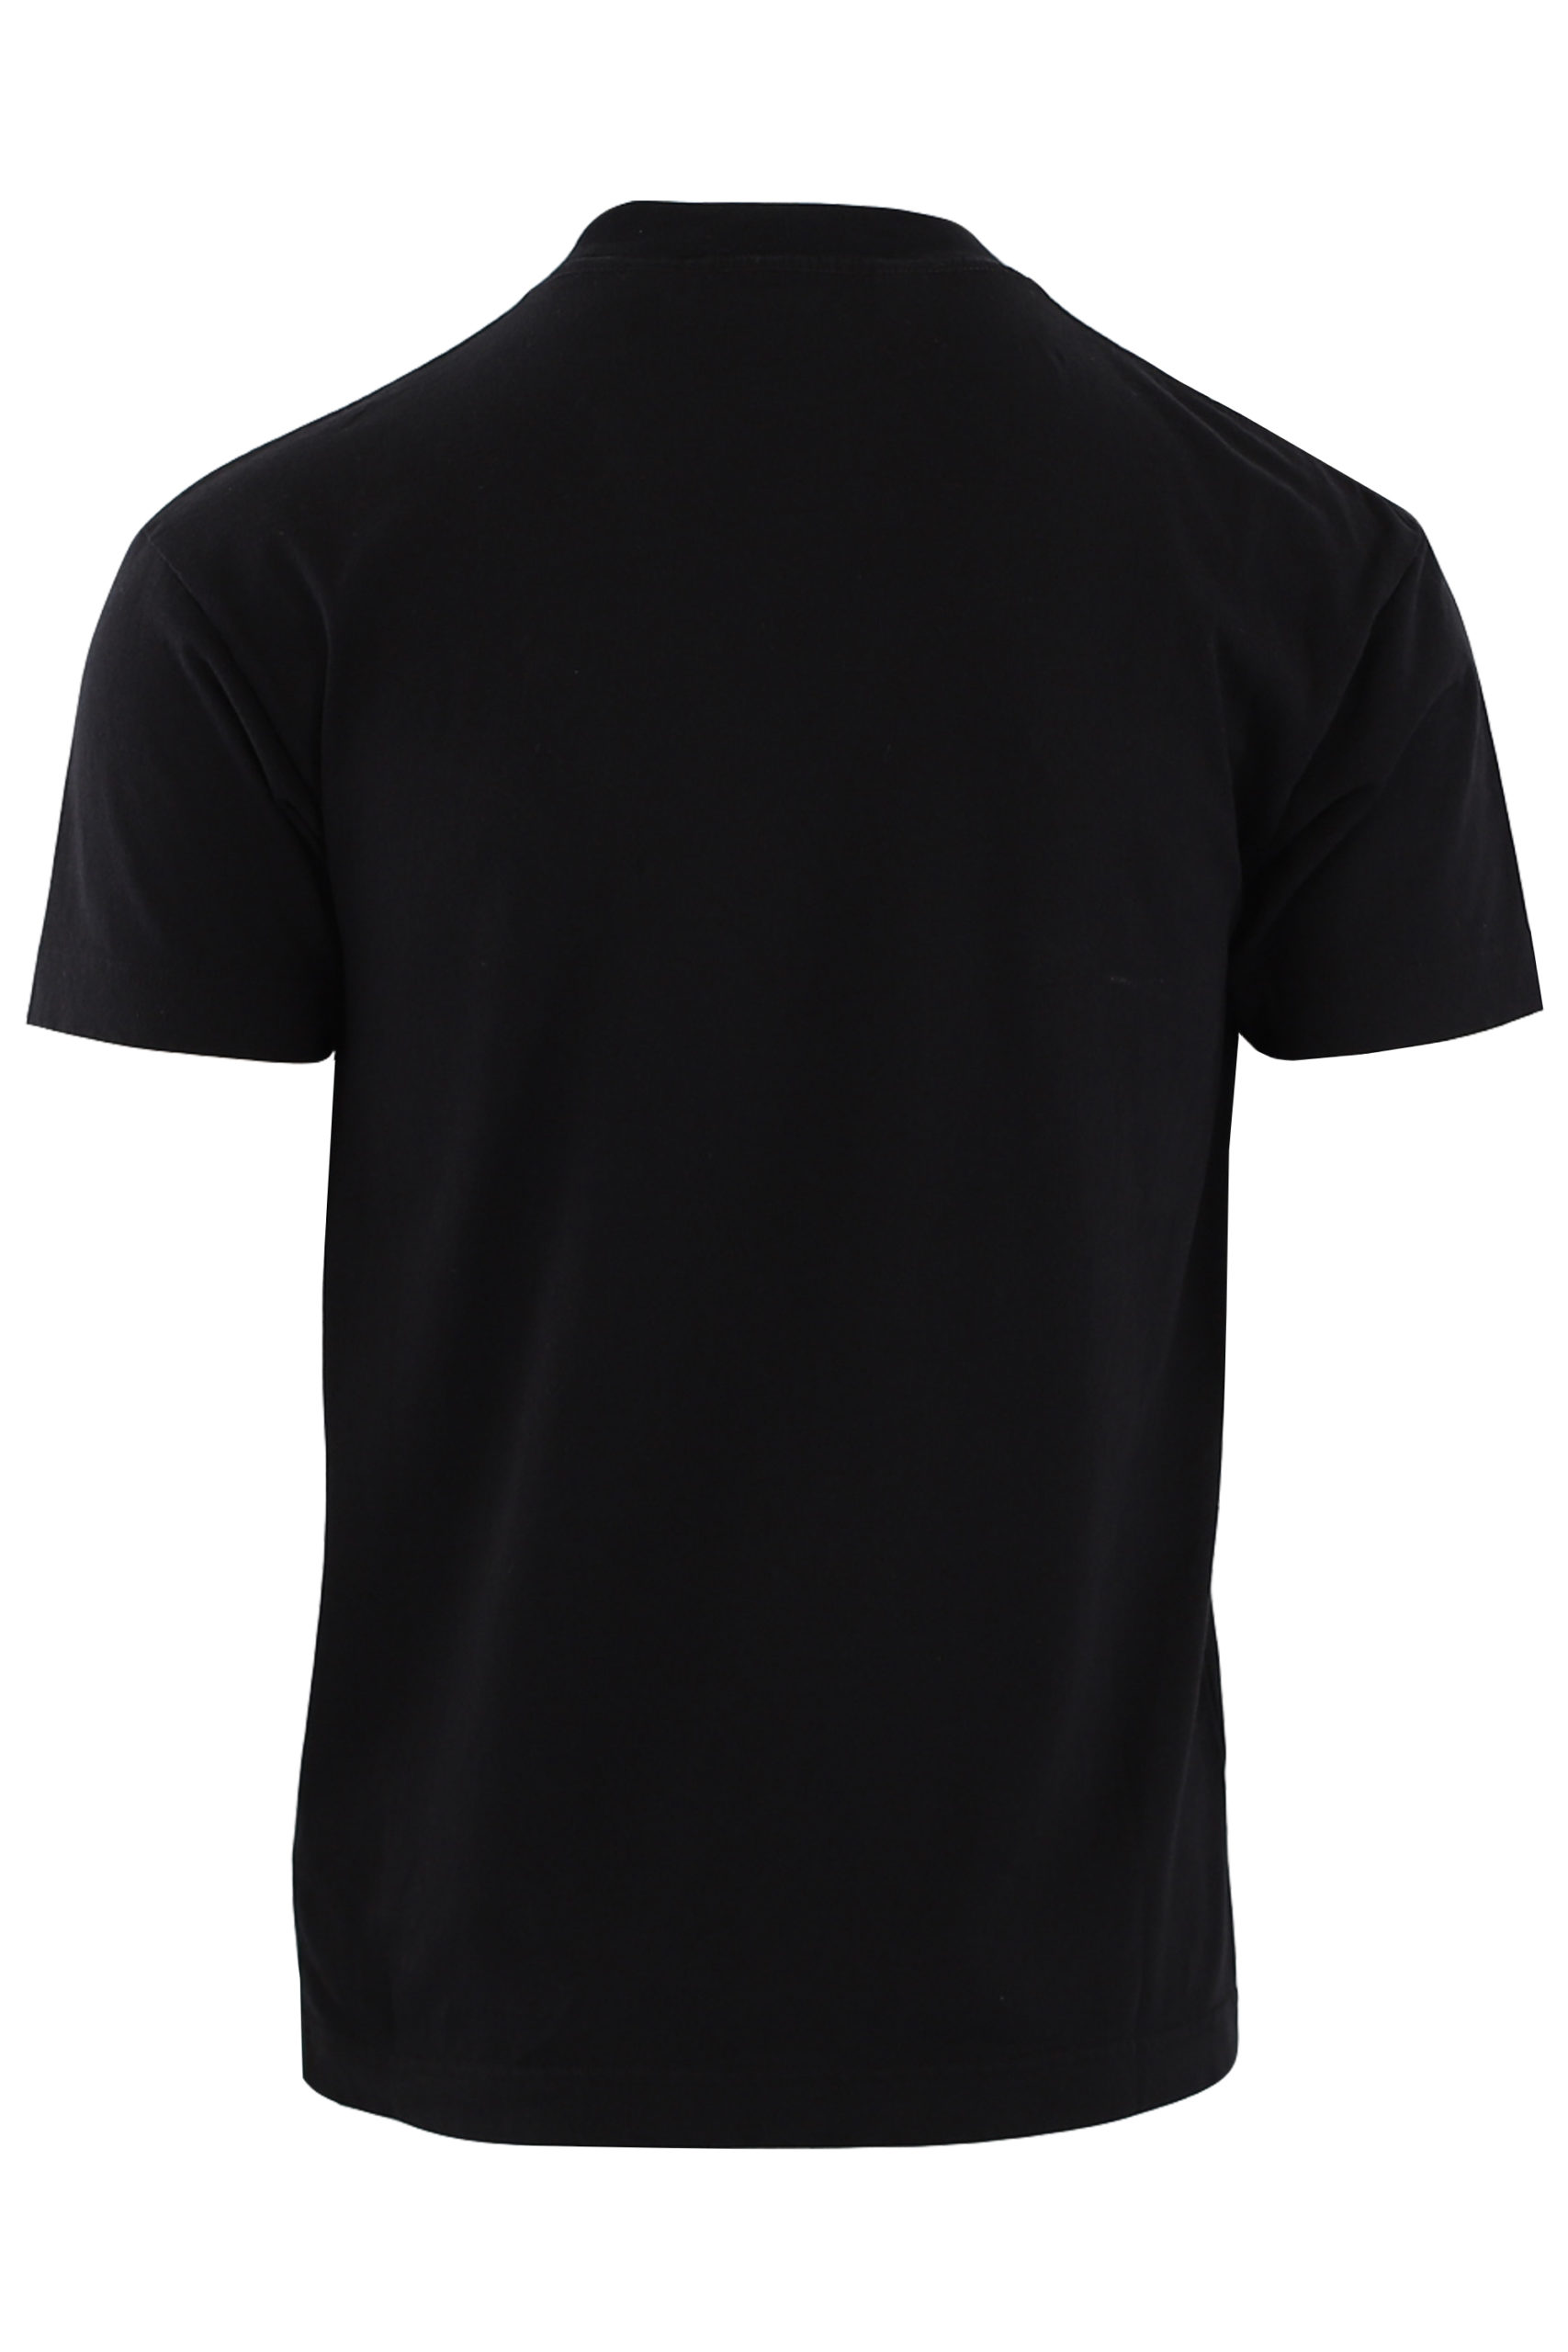 Palm Angels - Camiseta negra con motivo oso Spray - BLS Fashion